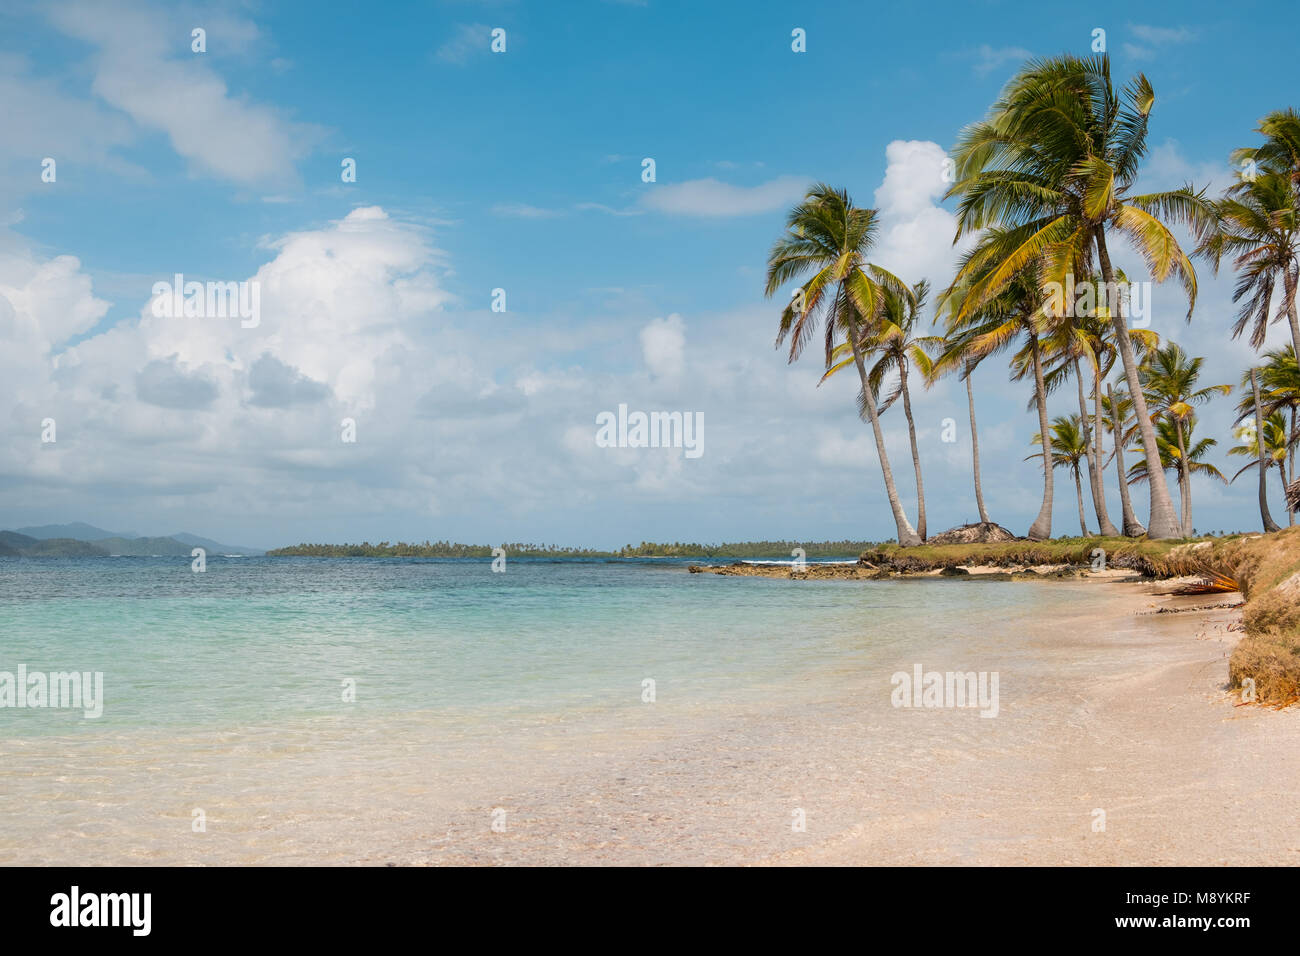 white sand beach, palm trees and turquoise water  - Caribbean Ocean - San Blas Islands Panama Stock Photo